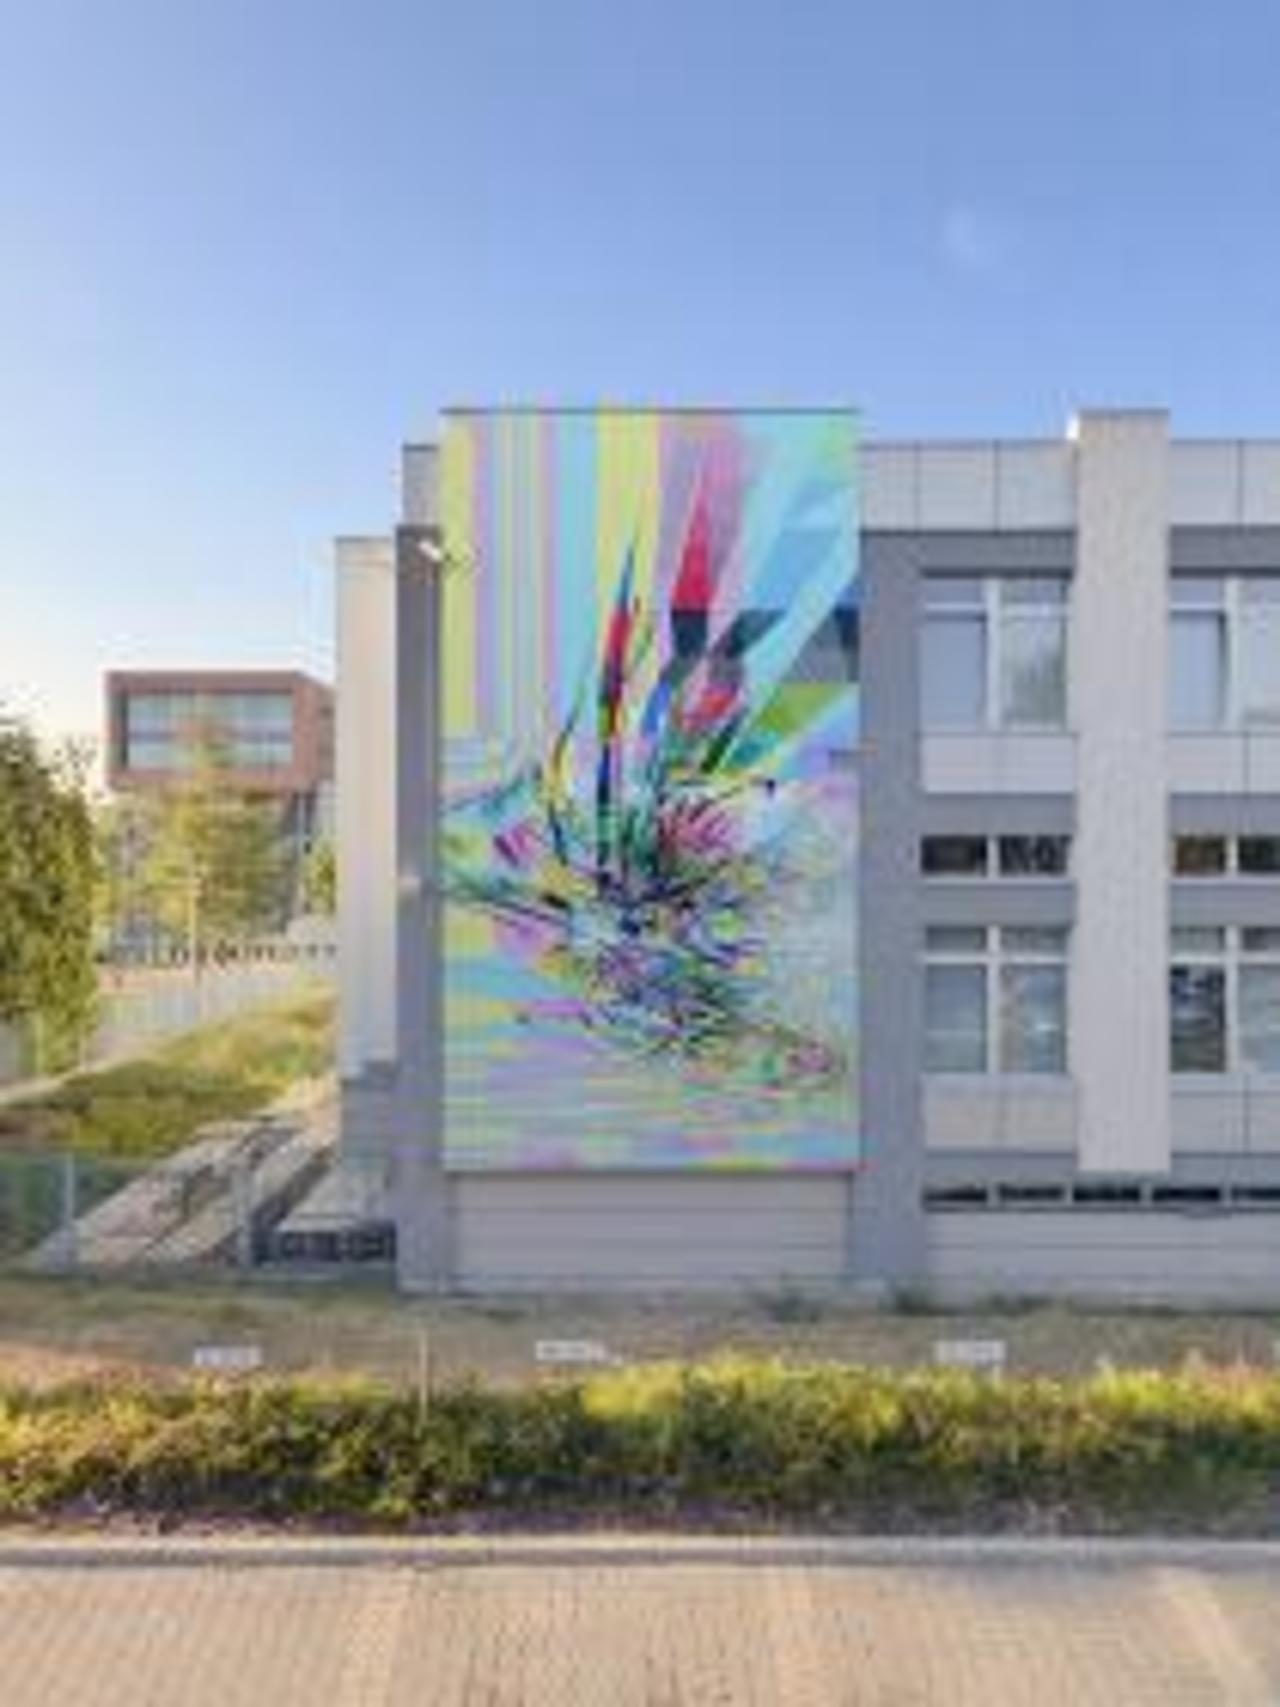 RT @richardbanfa: "Hexuberances", a new #mural by Proembrion in Lodz, #Poland #switch #graffiti #bedifferent #streetart #art #arte http://t.co/zIoCXOh0IB